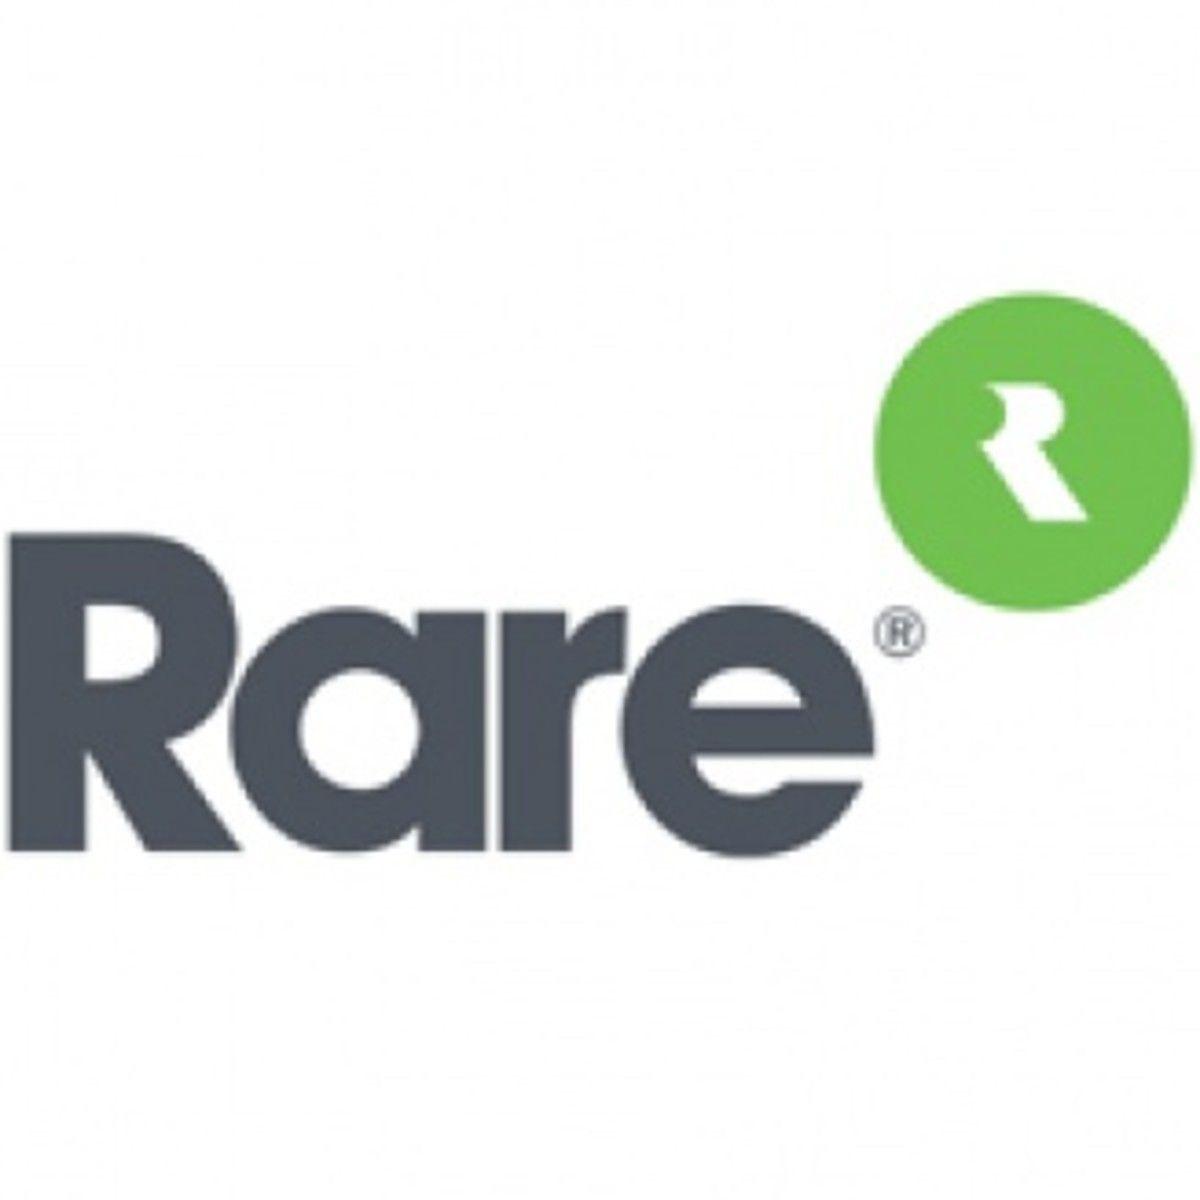 Google Rare Logo - Rare ditches gold logo for new look - MCV